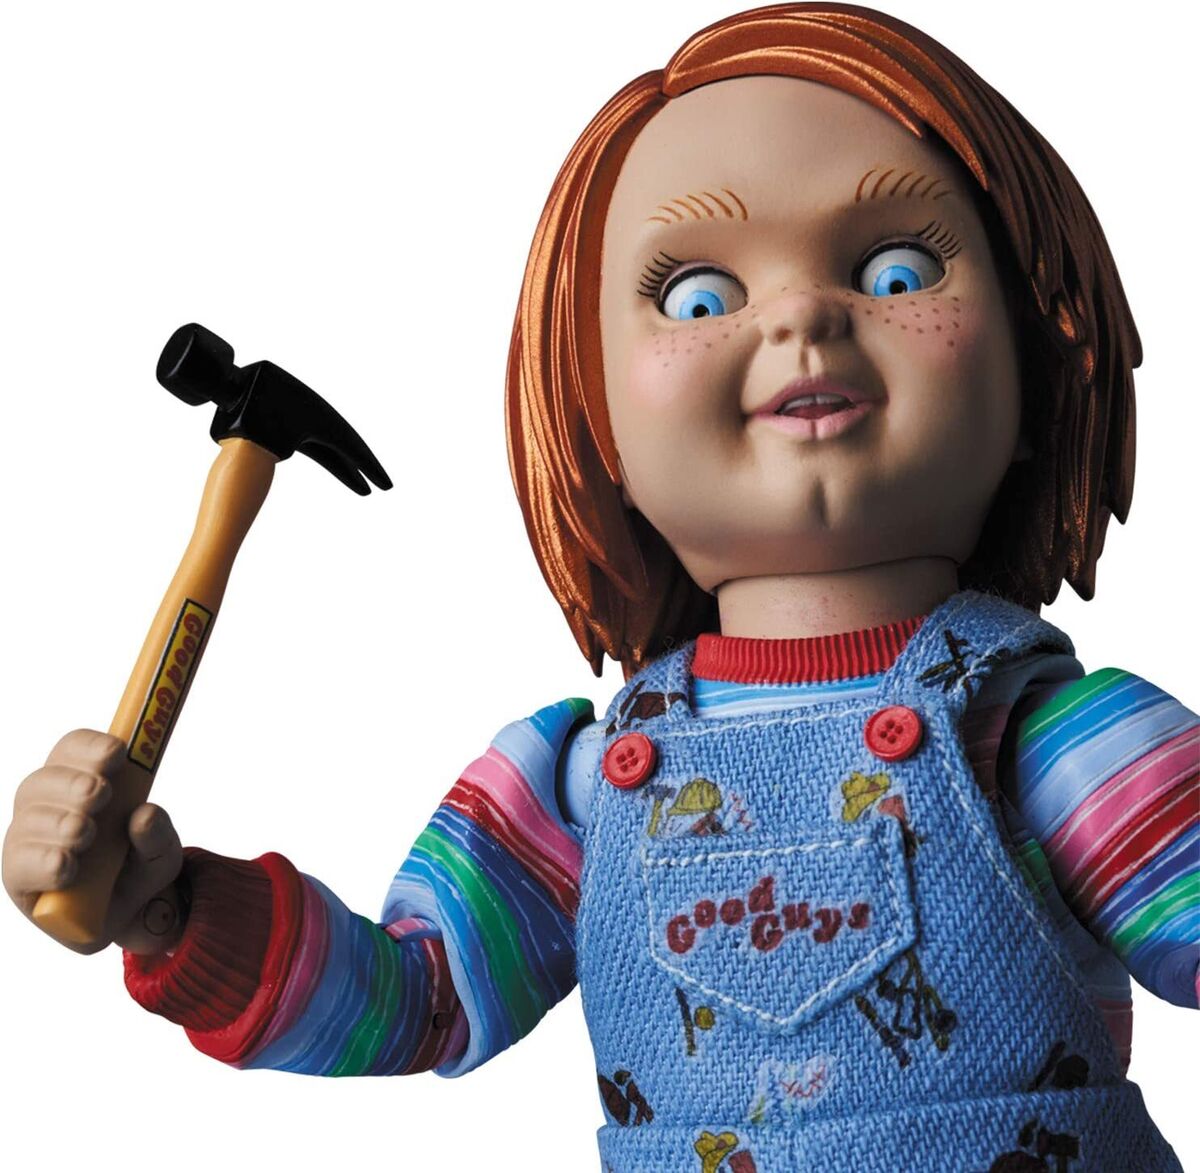 Medicom Child's Play 2: Good Guys Chucky Doll Mafex Action Figure 